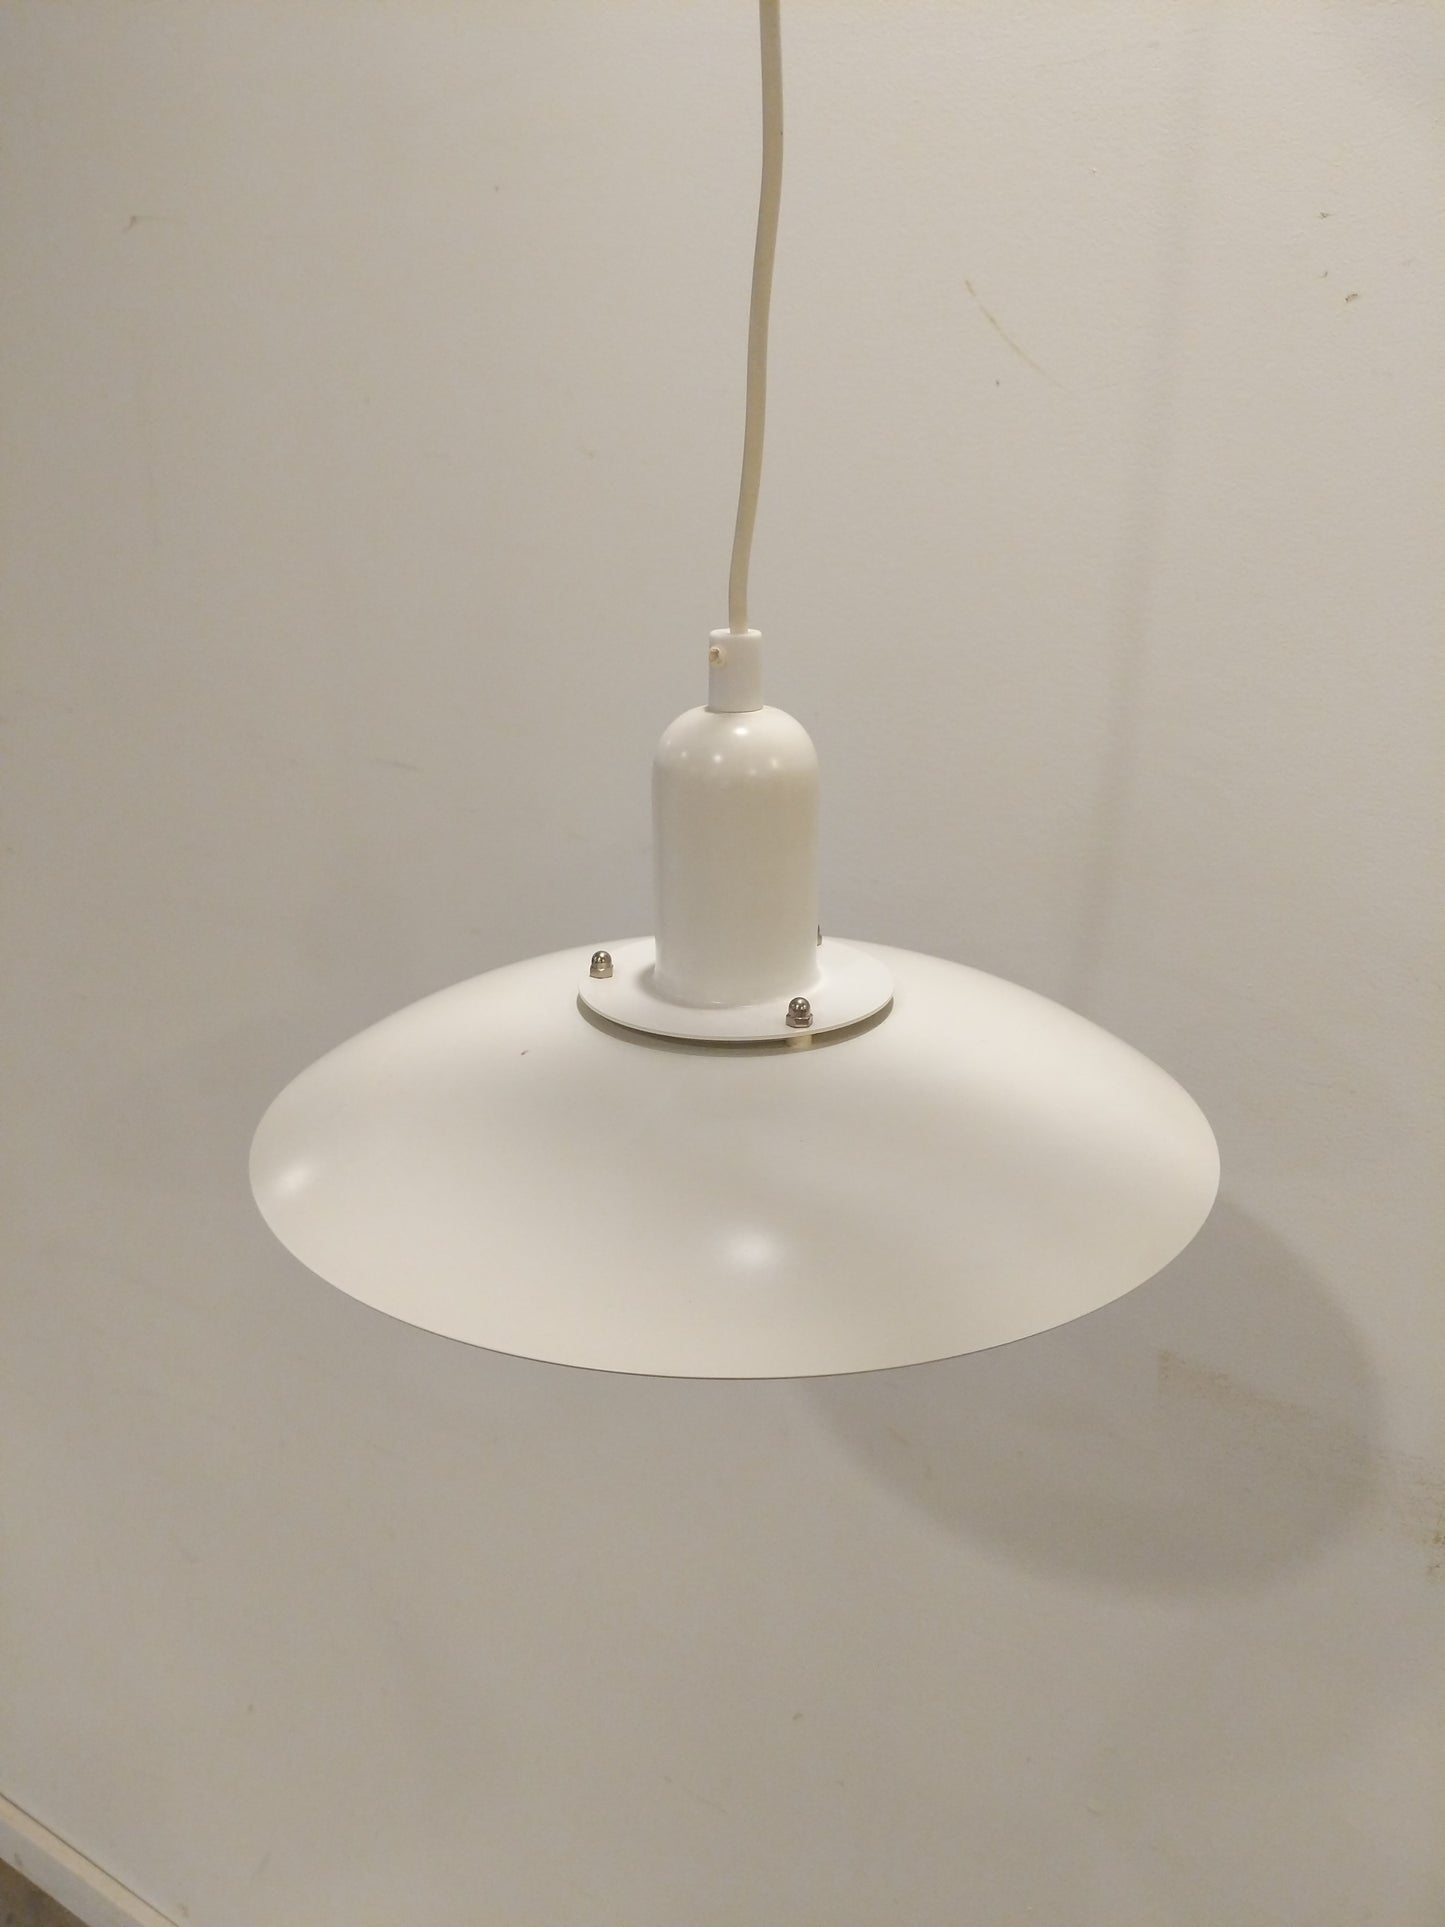 Vintage Danish Modern Lamp by Jeka